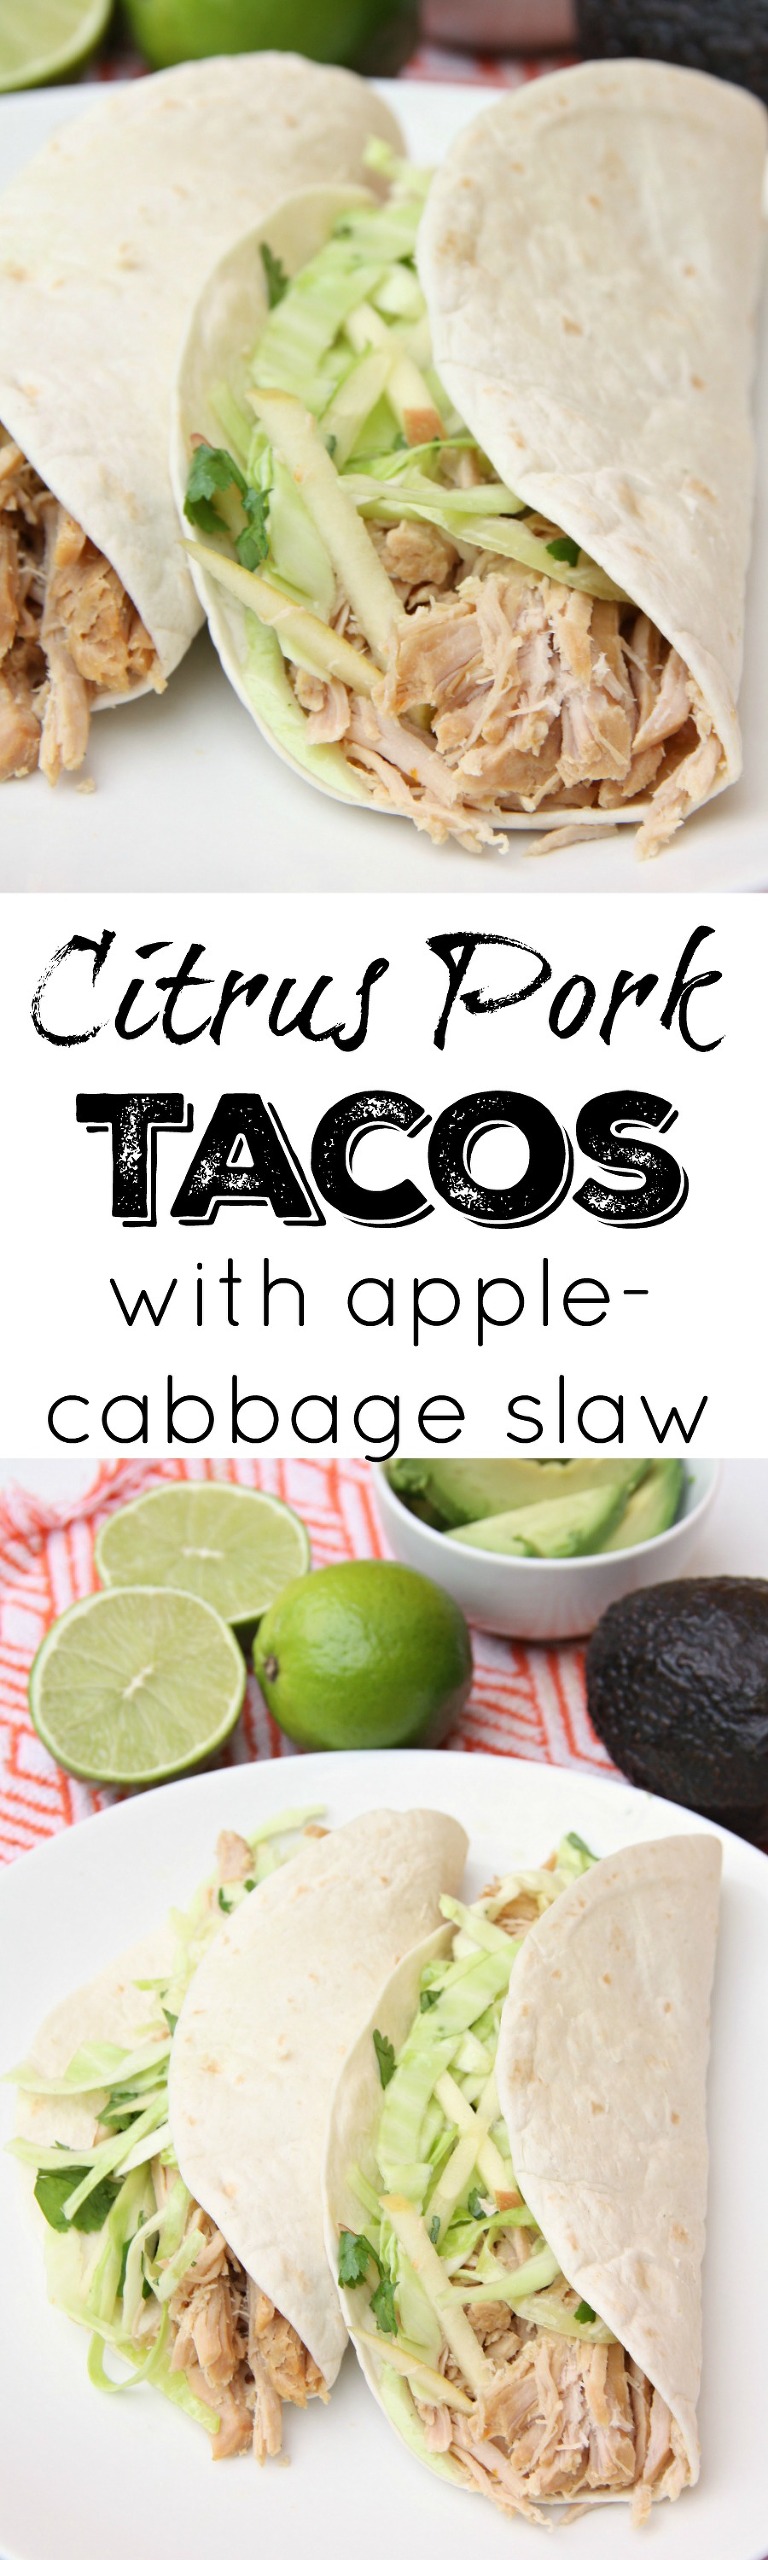 Smoky Pork Tacos with Apple Cabbage slaw